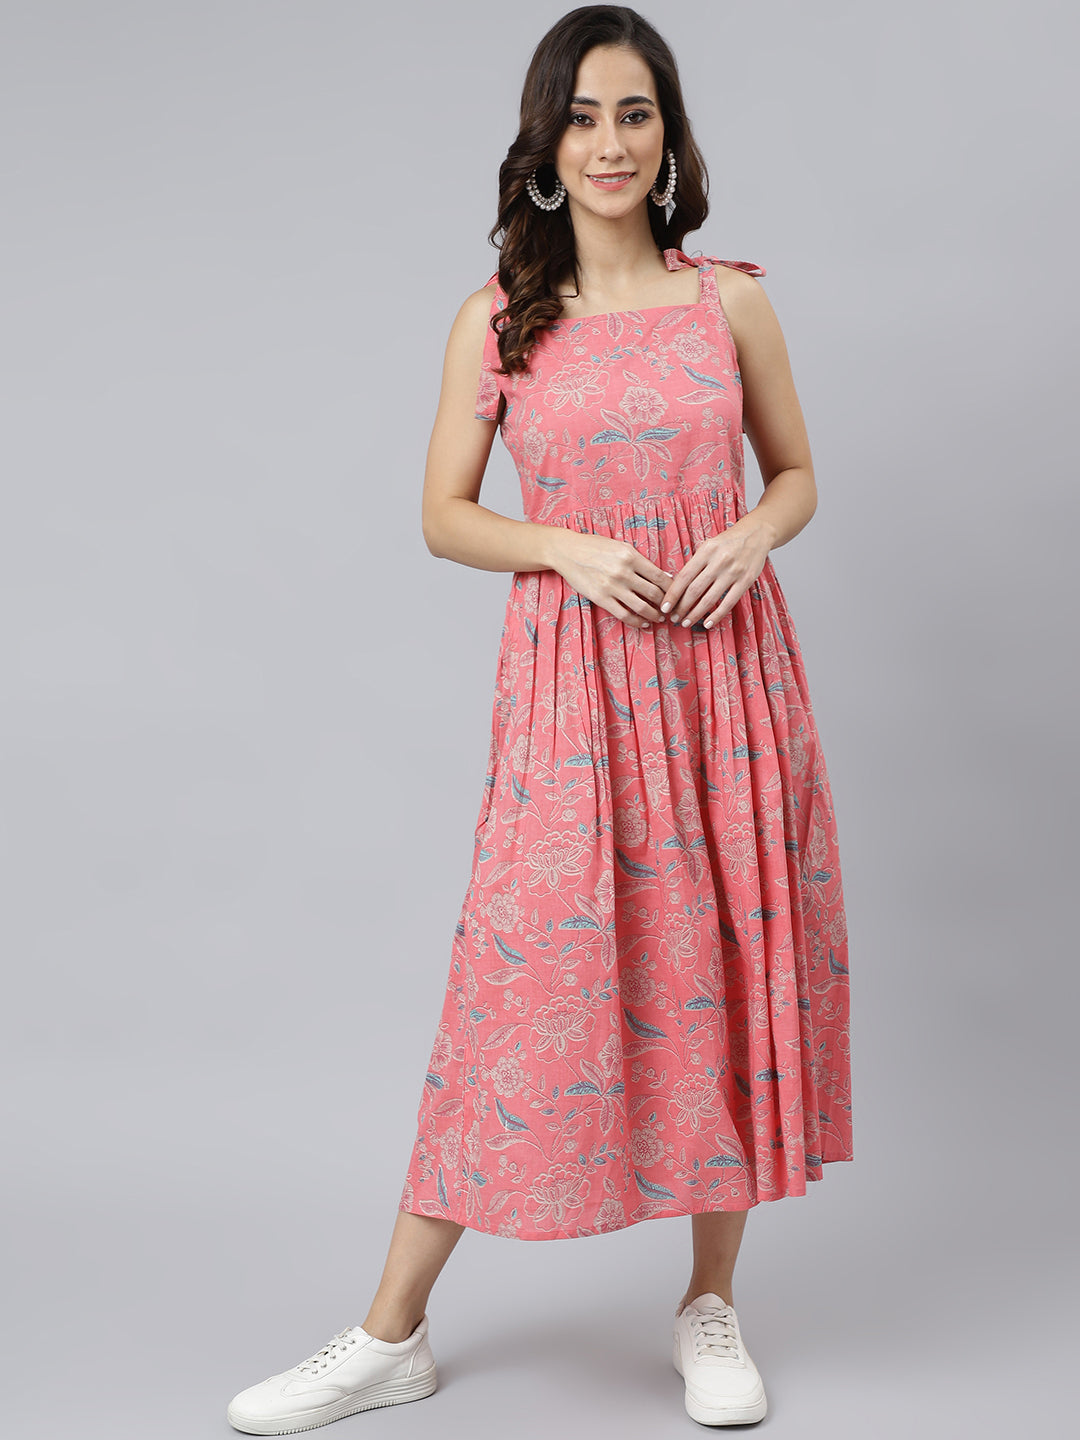 Women's Floral Printed Pink Cotton Dress - Janasya